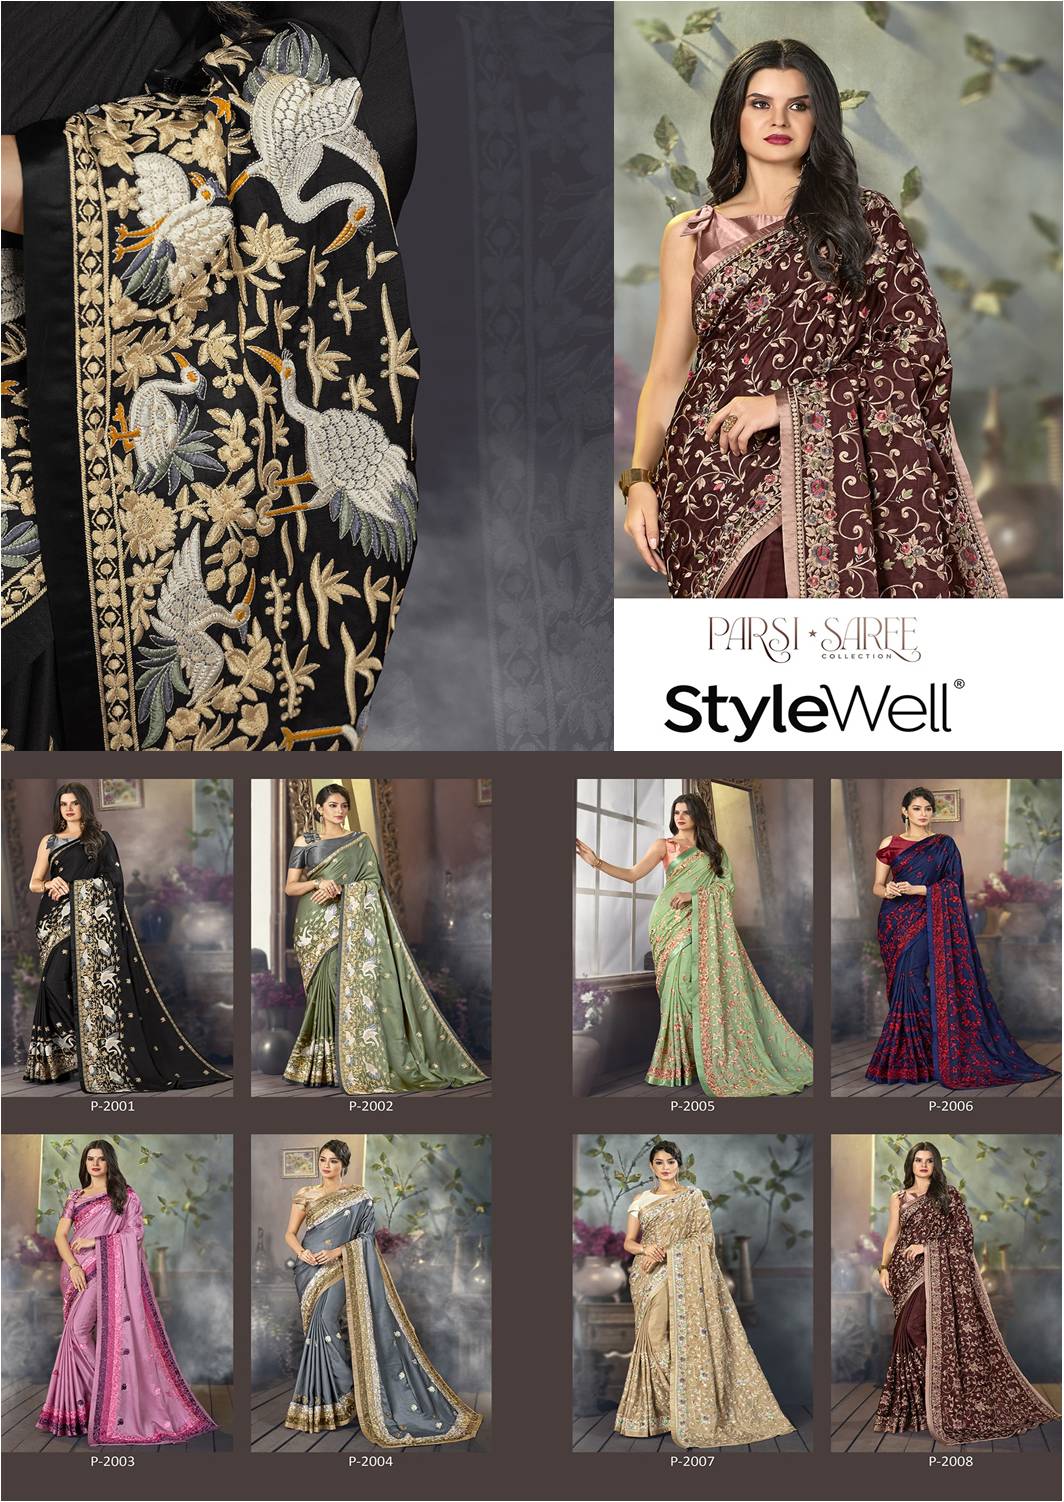 Parsi Saree StyleWell Vol.1